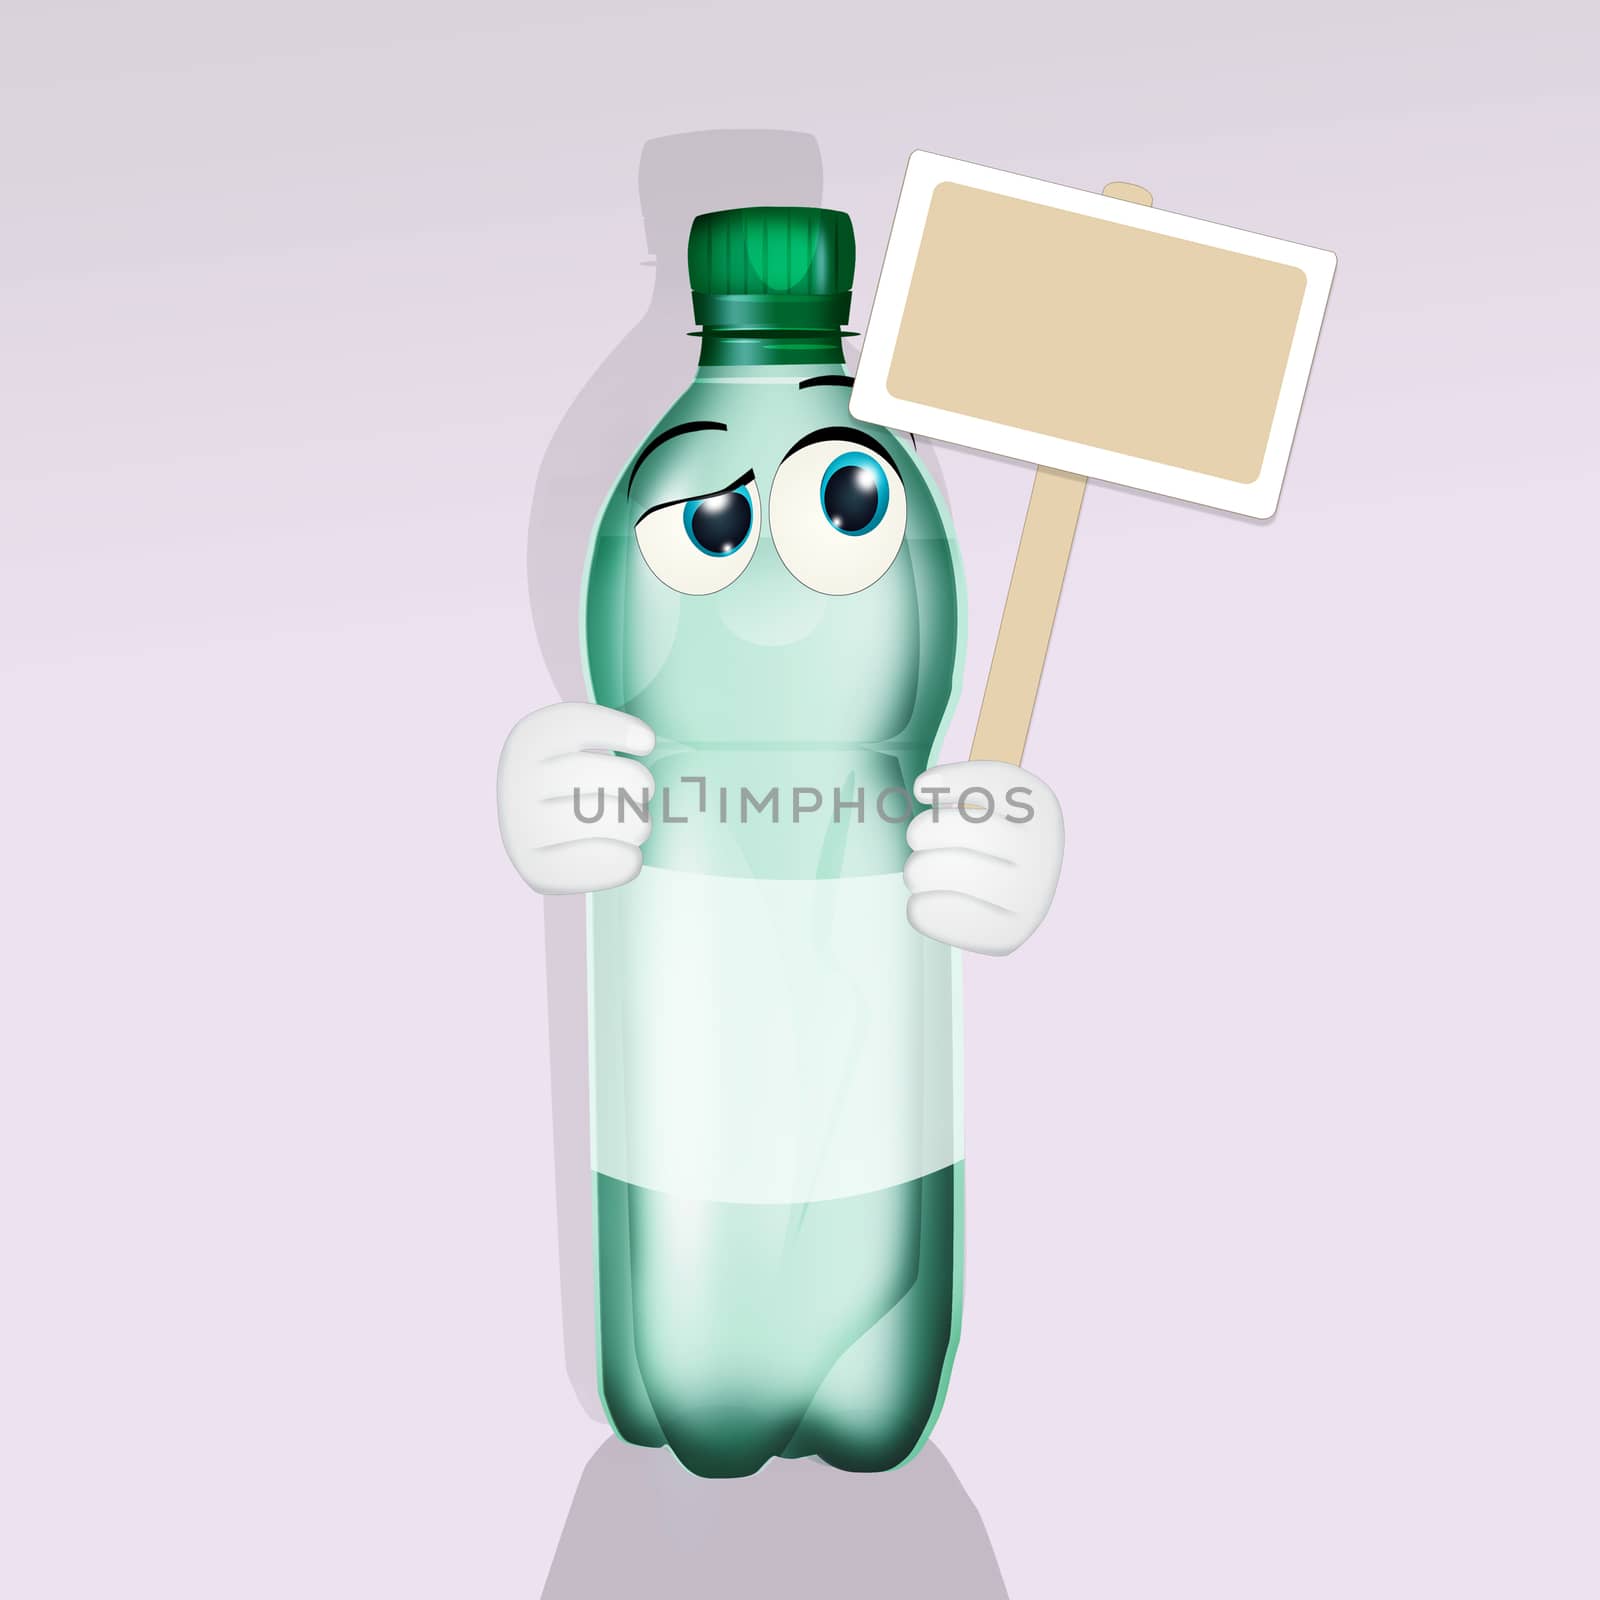 illustration of funny plastic bottle